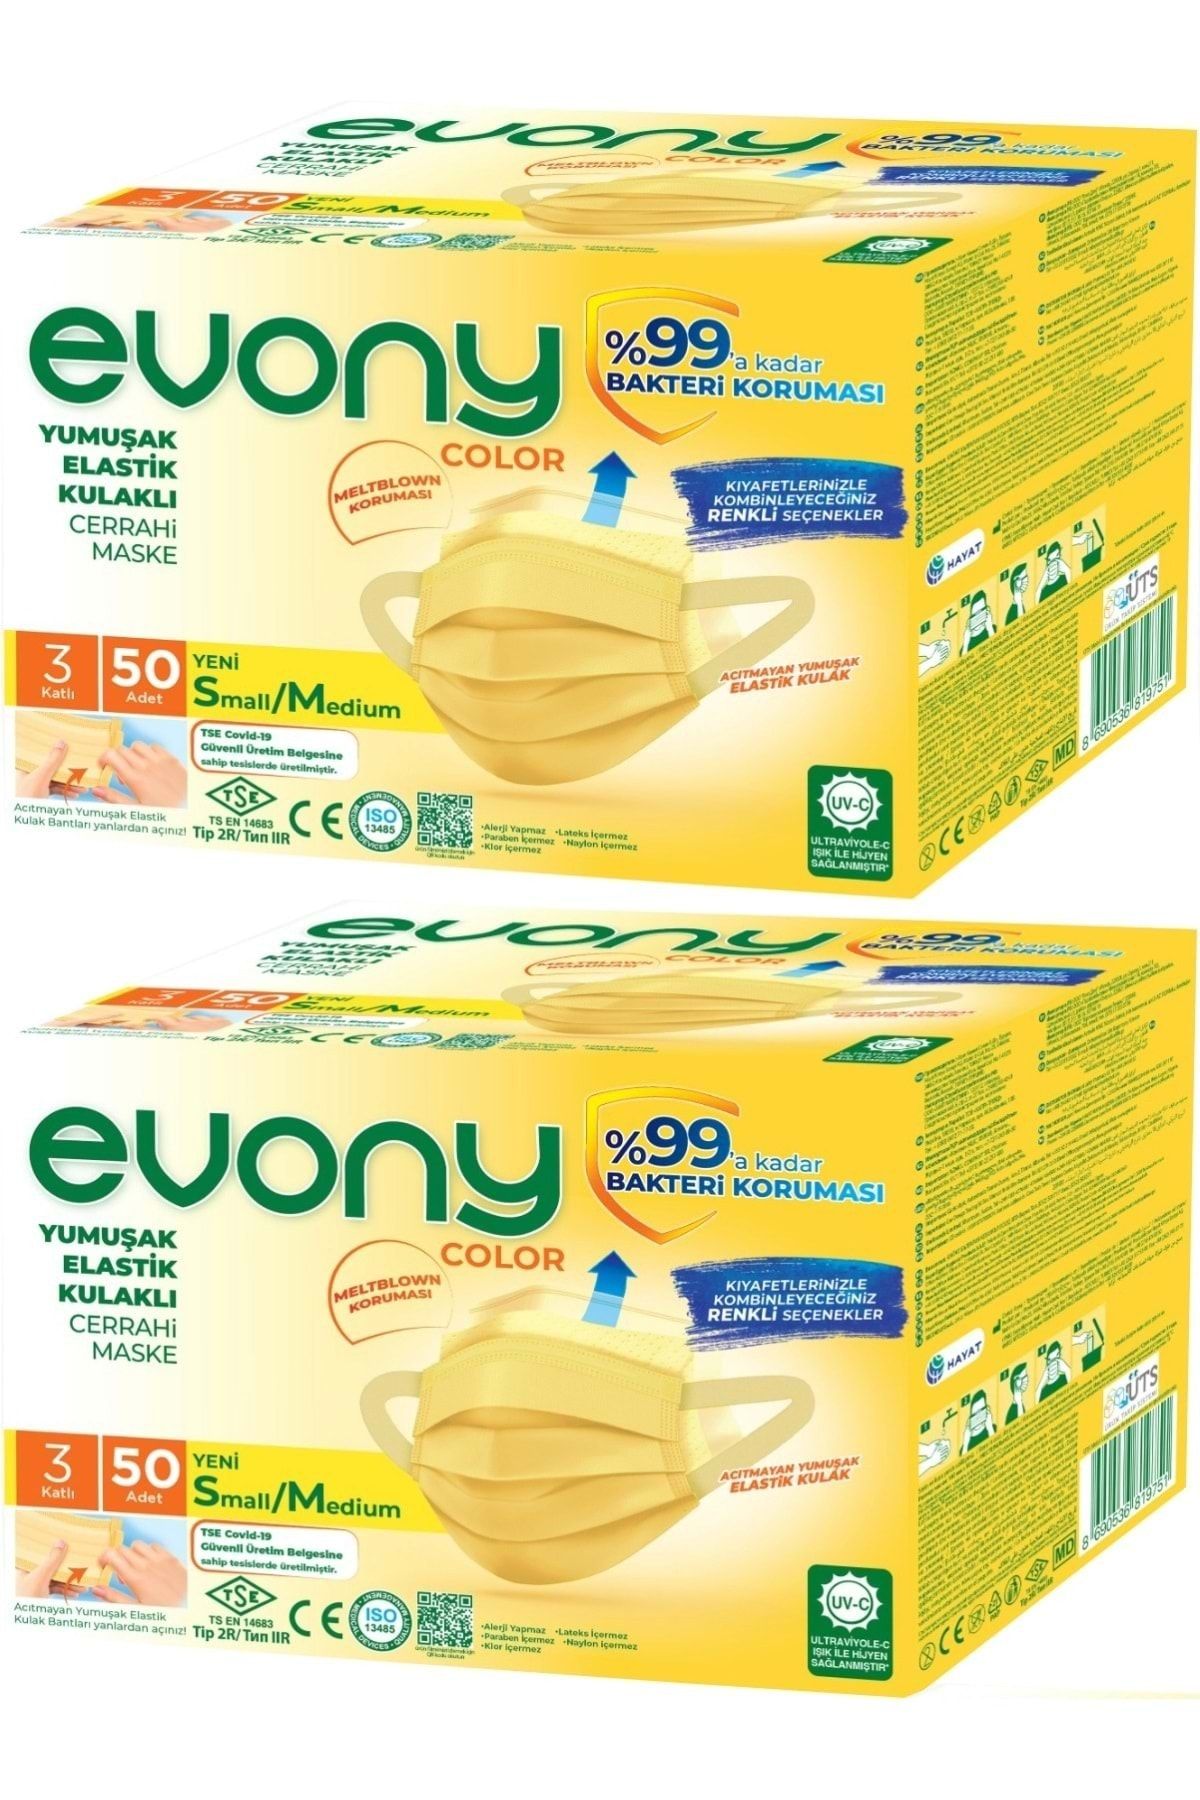 Evony 3 Katlı Filtreli Burun Telli Cerrahi Maske 100 Lü Set Small/medium Sarı 160*90mm (2PK*50)